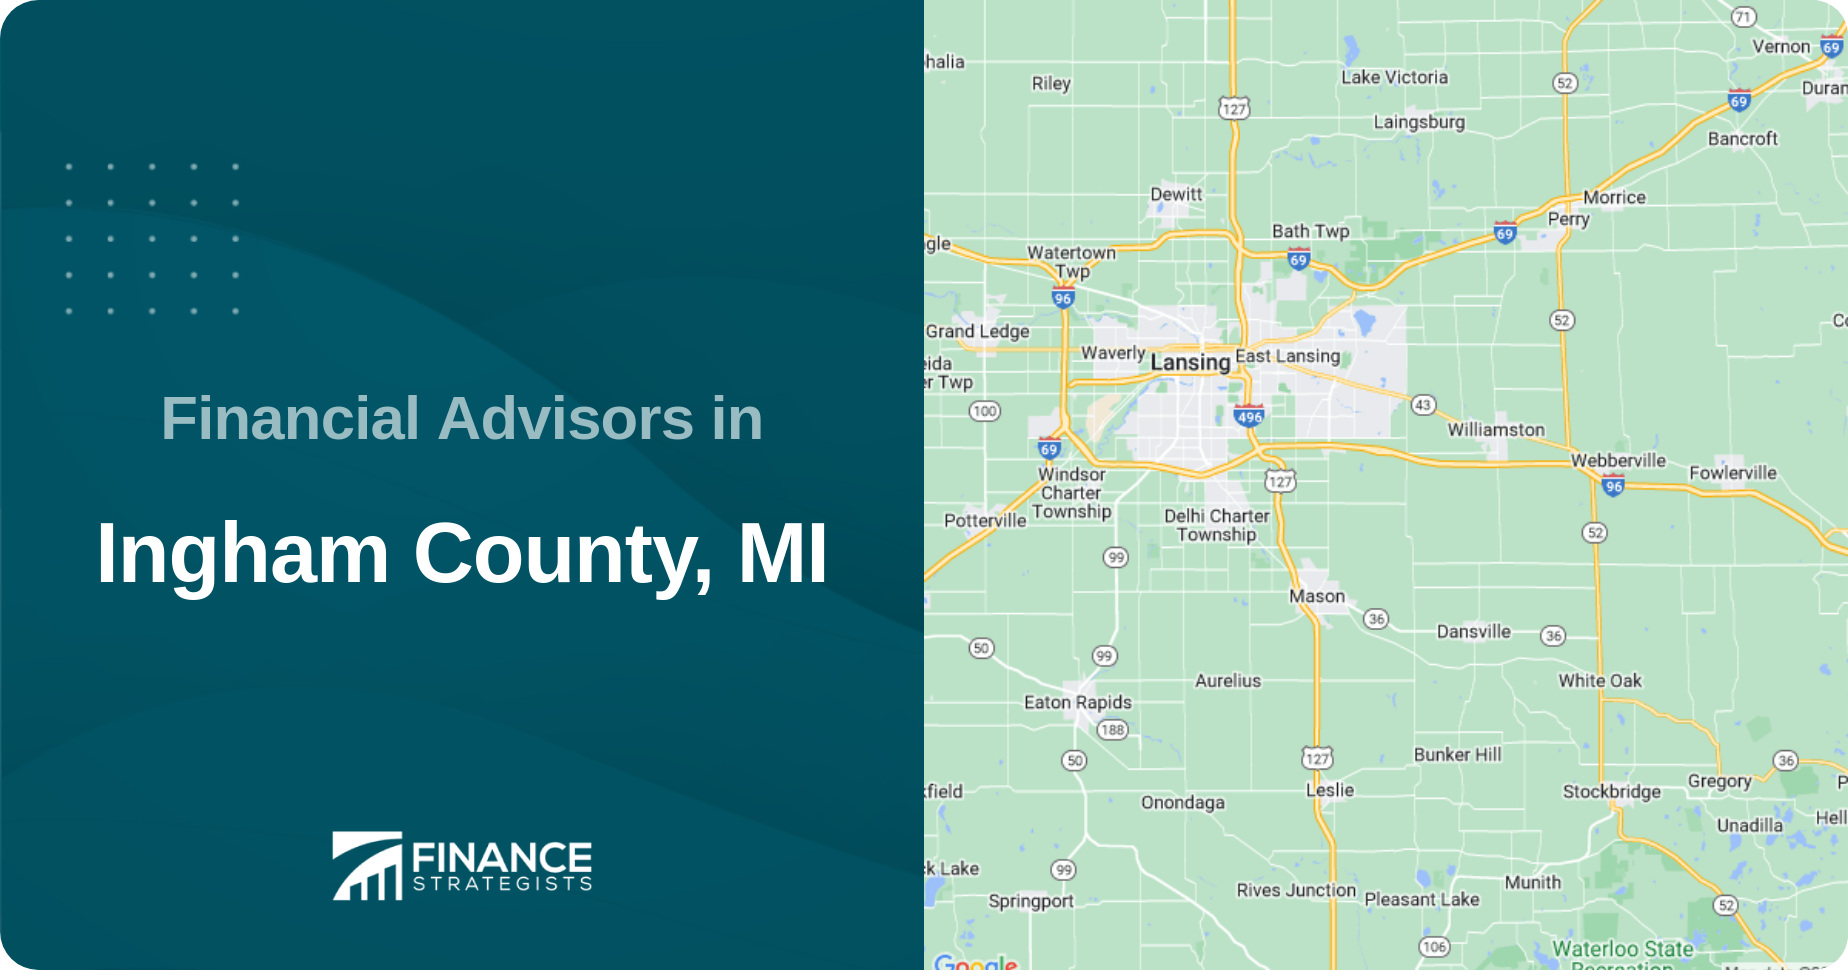 Financial Advisors in Ingham County, MI